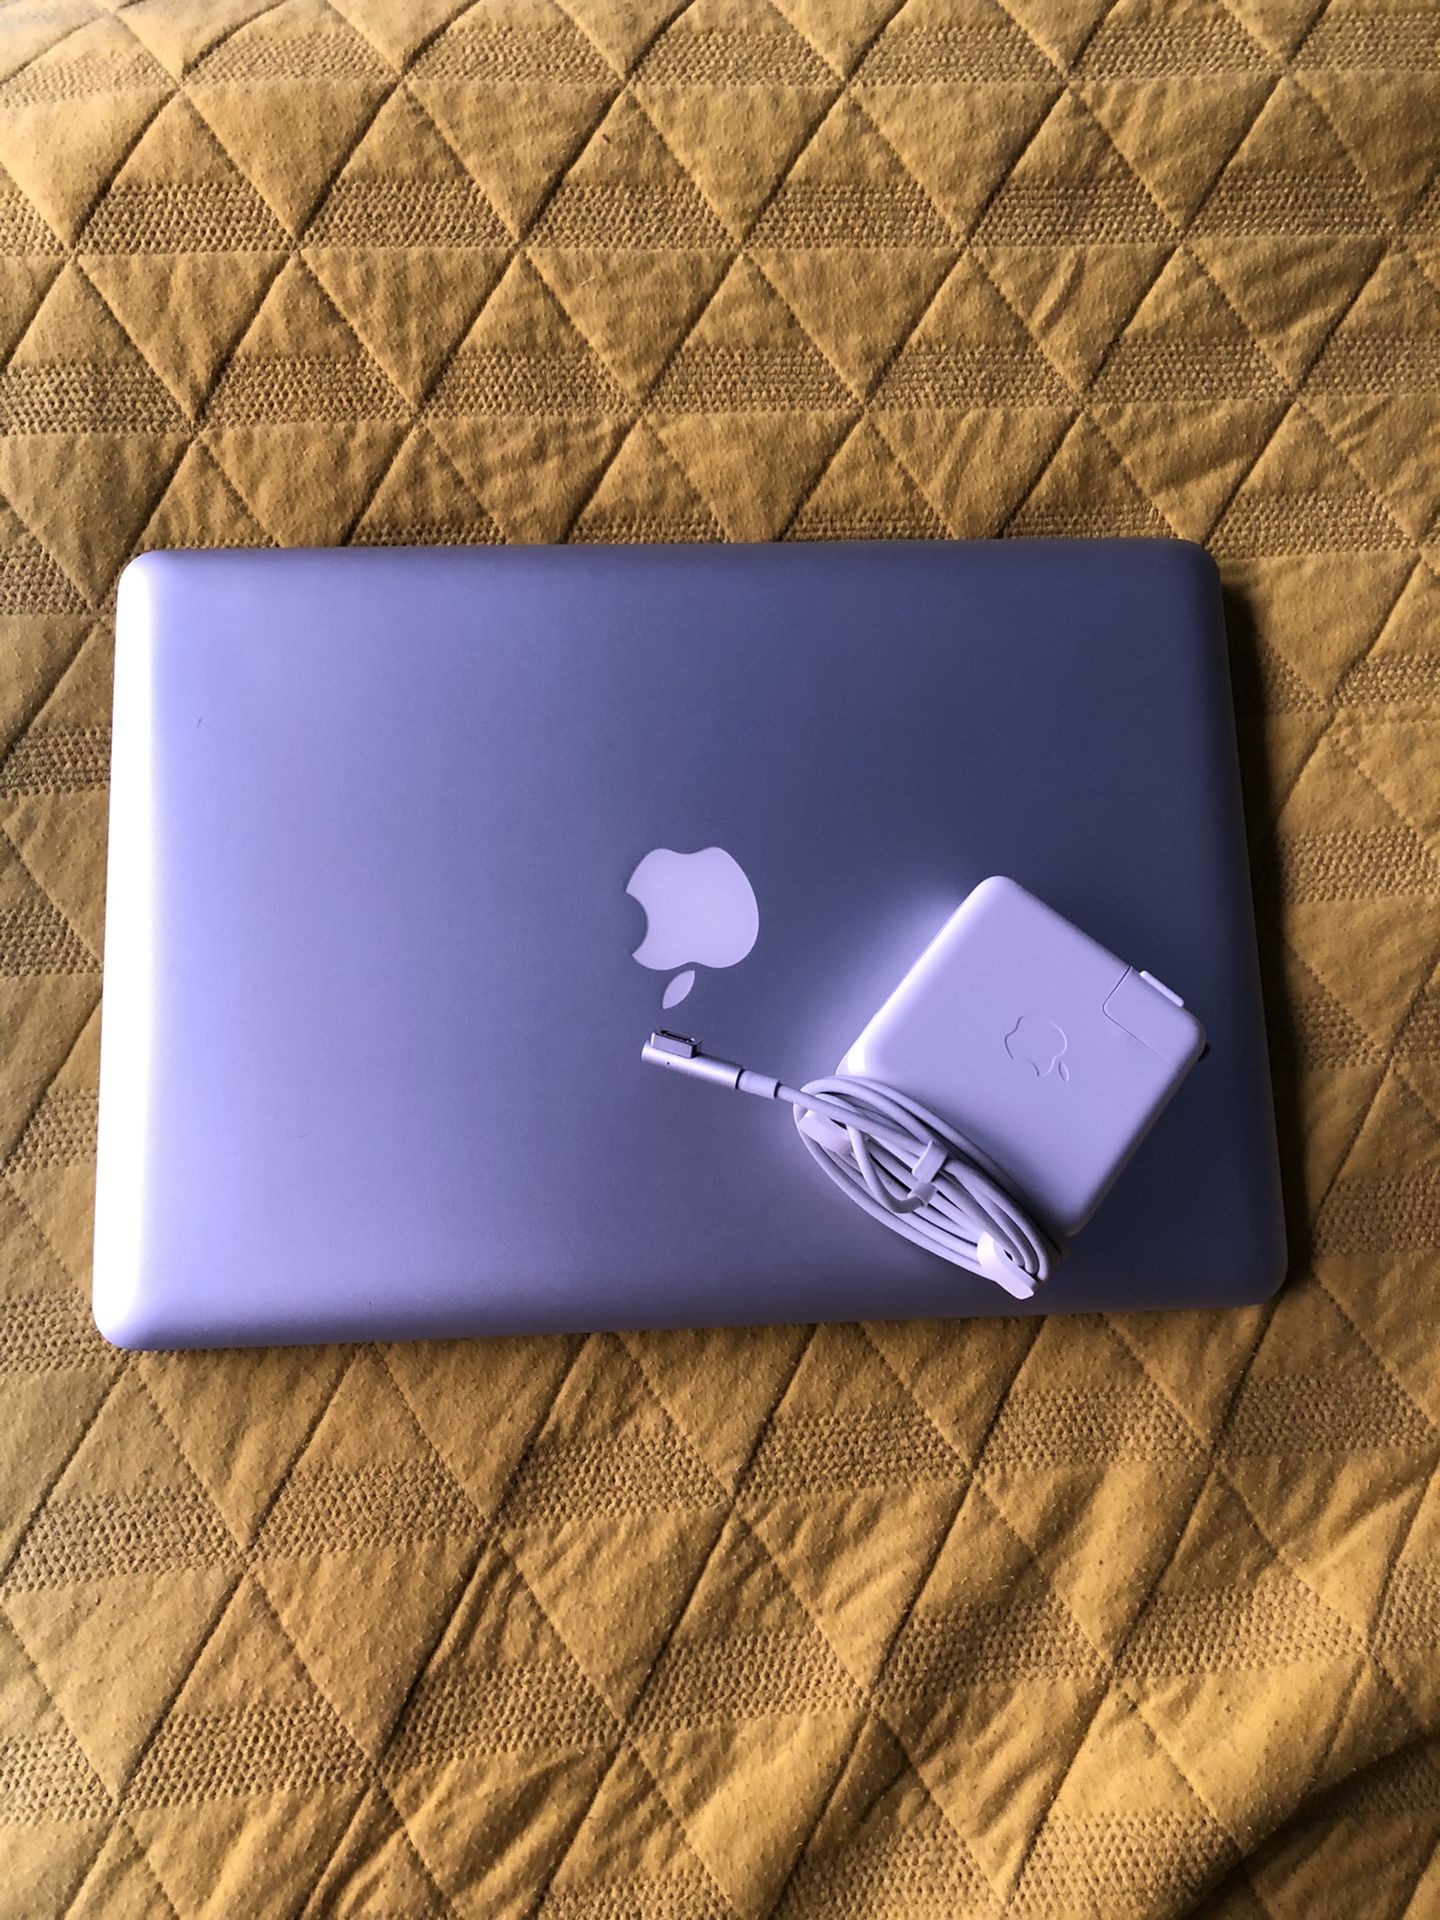 MacBook Pro (13-inch, mid 2012)